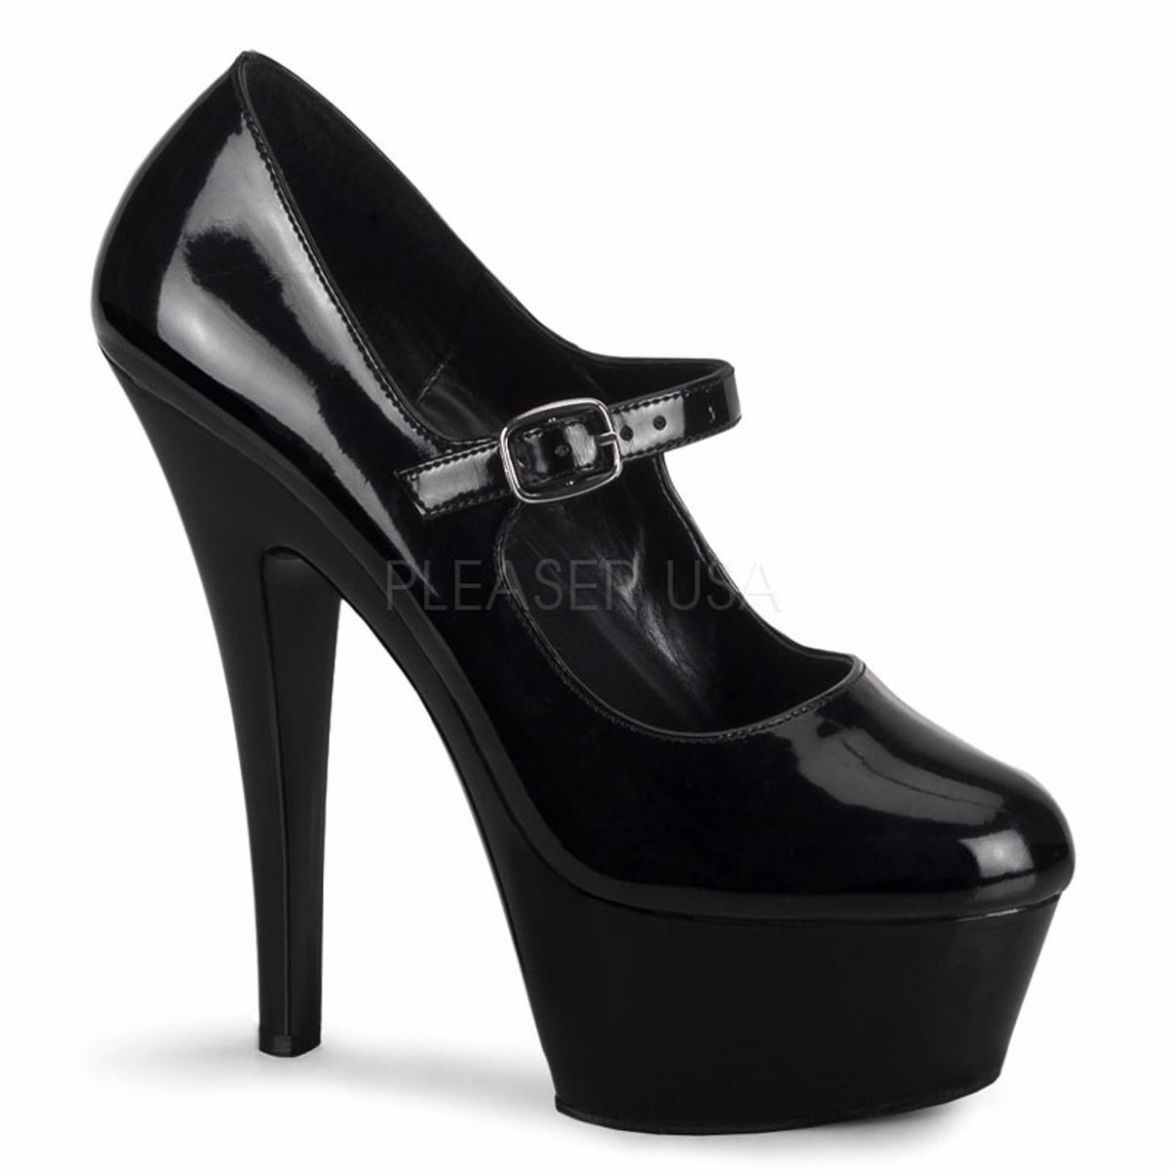 Product image of Pleaser Kiss-280 Black Patent/Black, 6 inch (15.2 cm) Heel, 1 3/4 inch (4.4 cm) Platform Court Pump Shoes